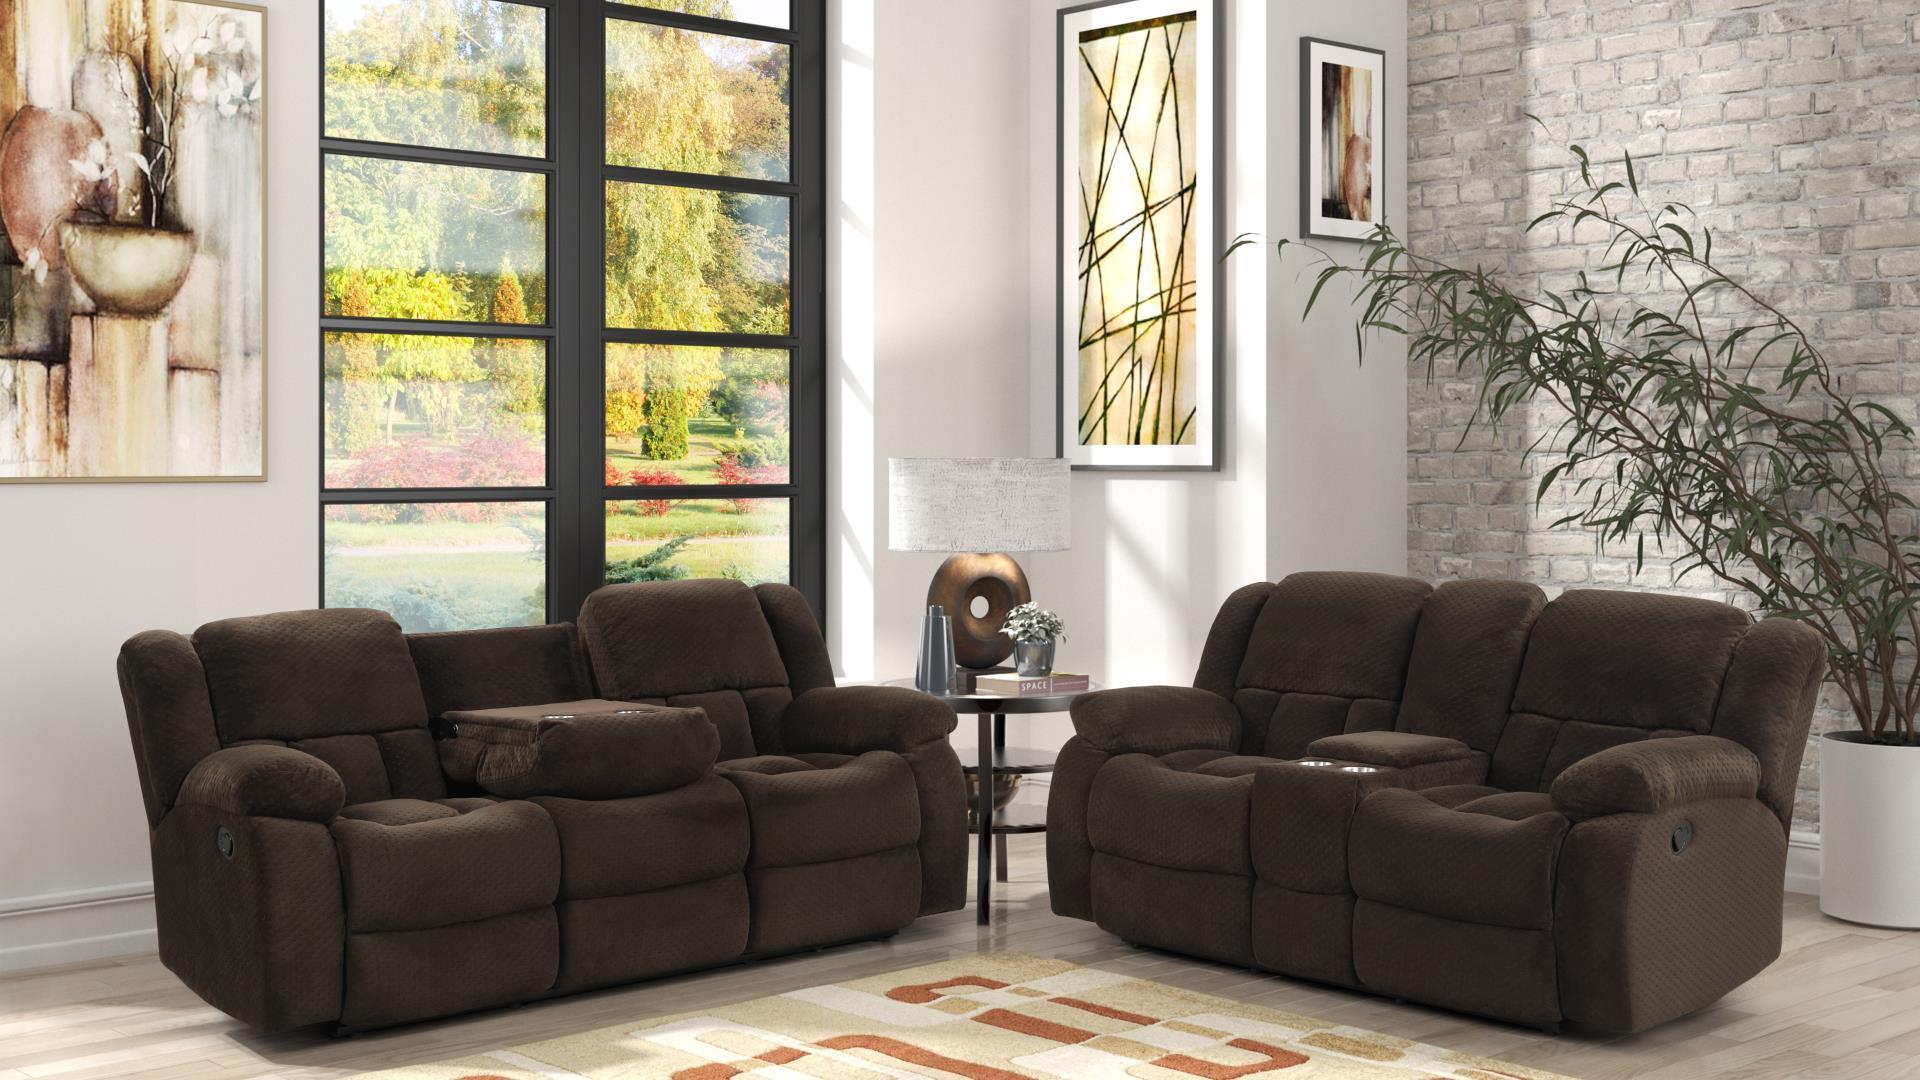 Galaxy Home Furniture ARMADA Brown Recliner Sofa Set